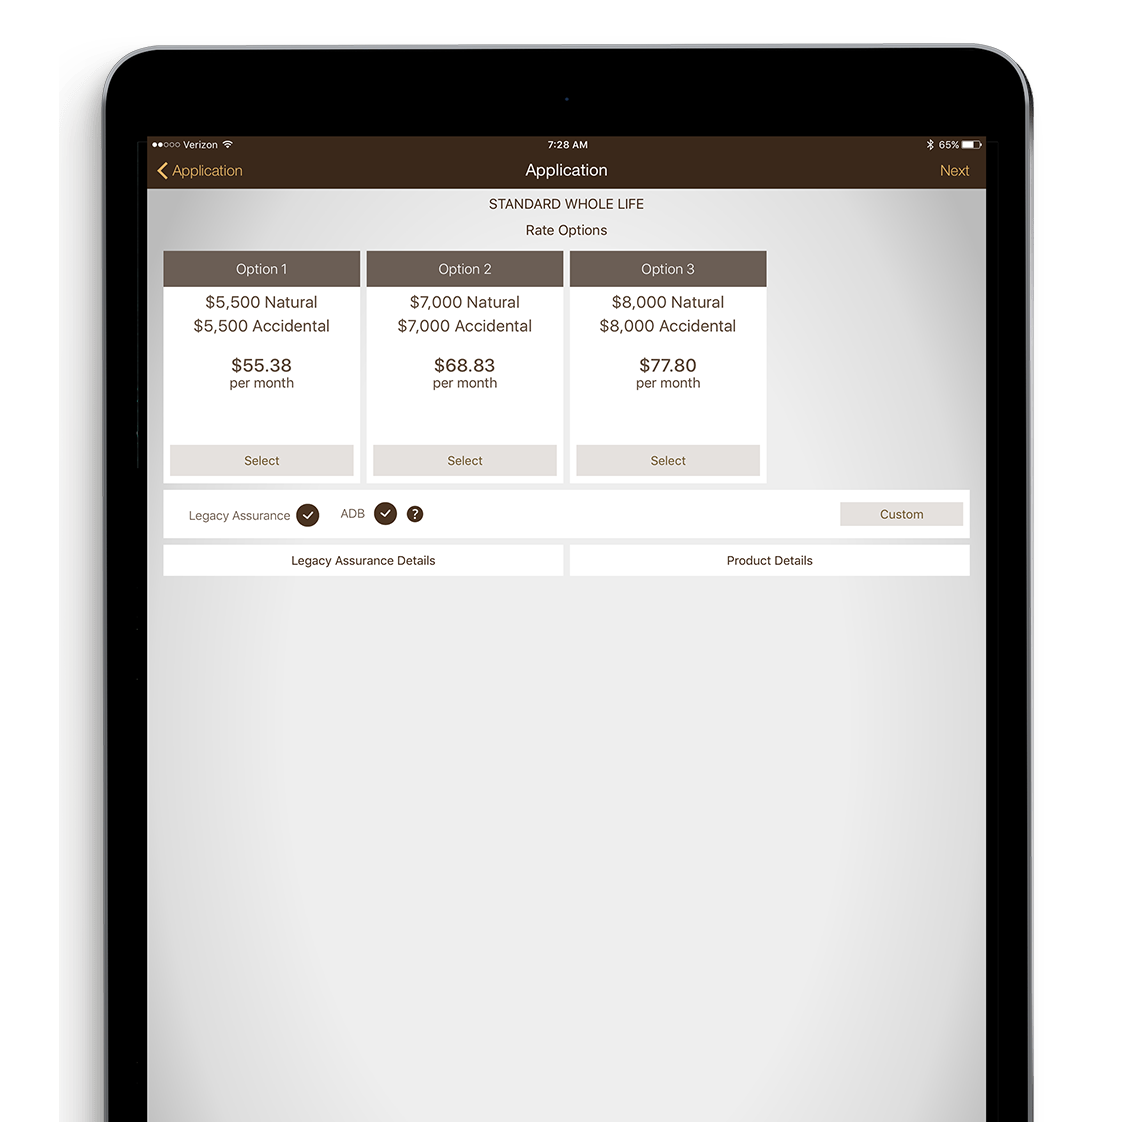 iPad showing Senior Life's various plans.